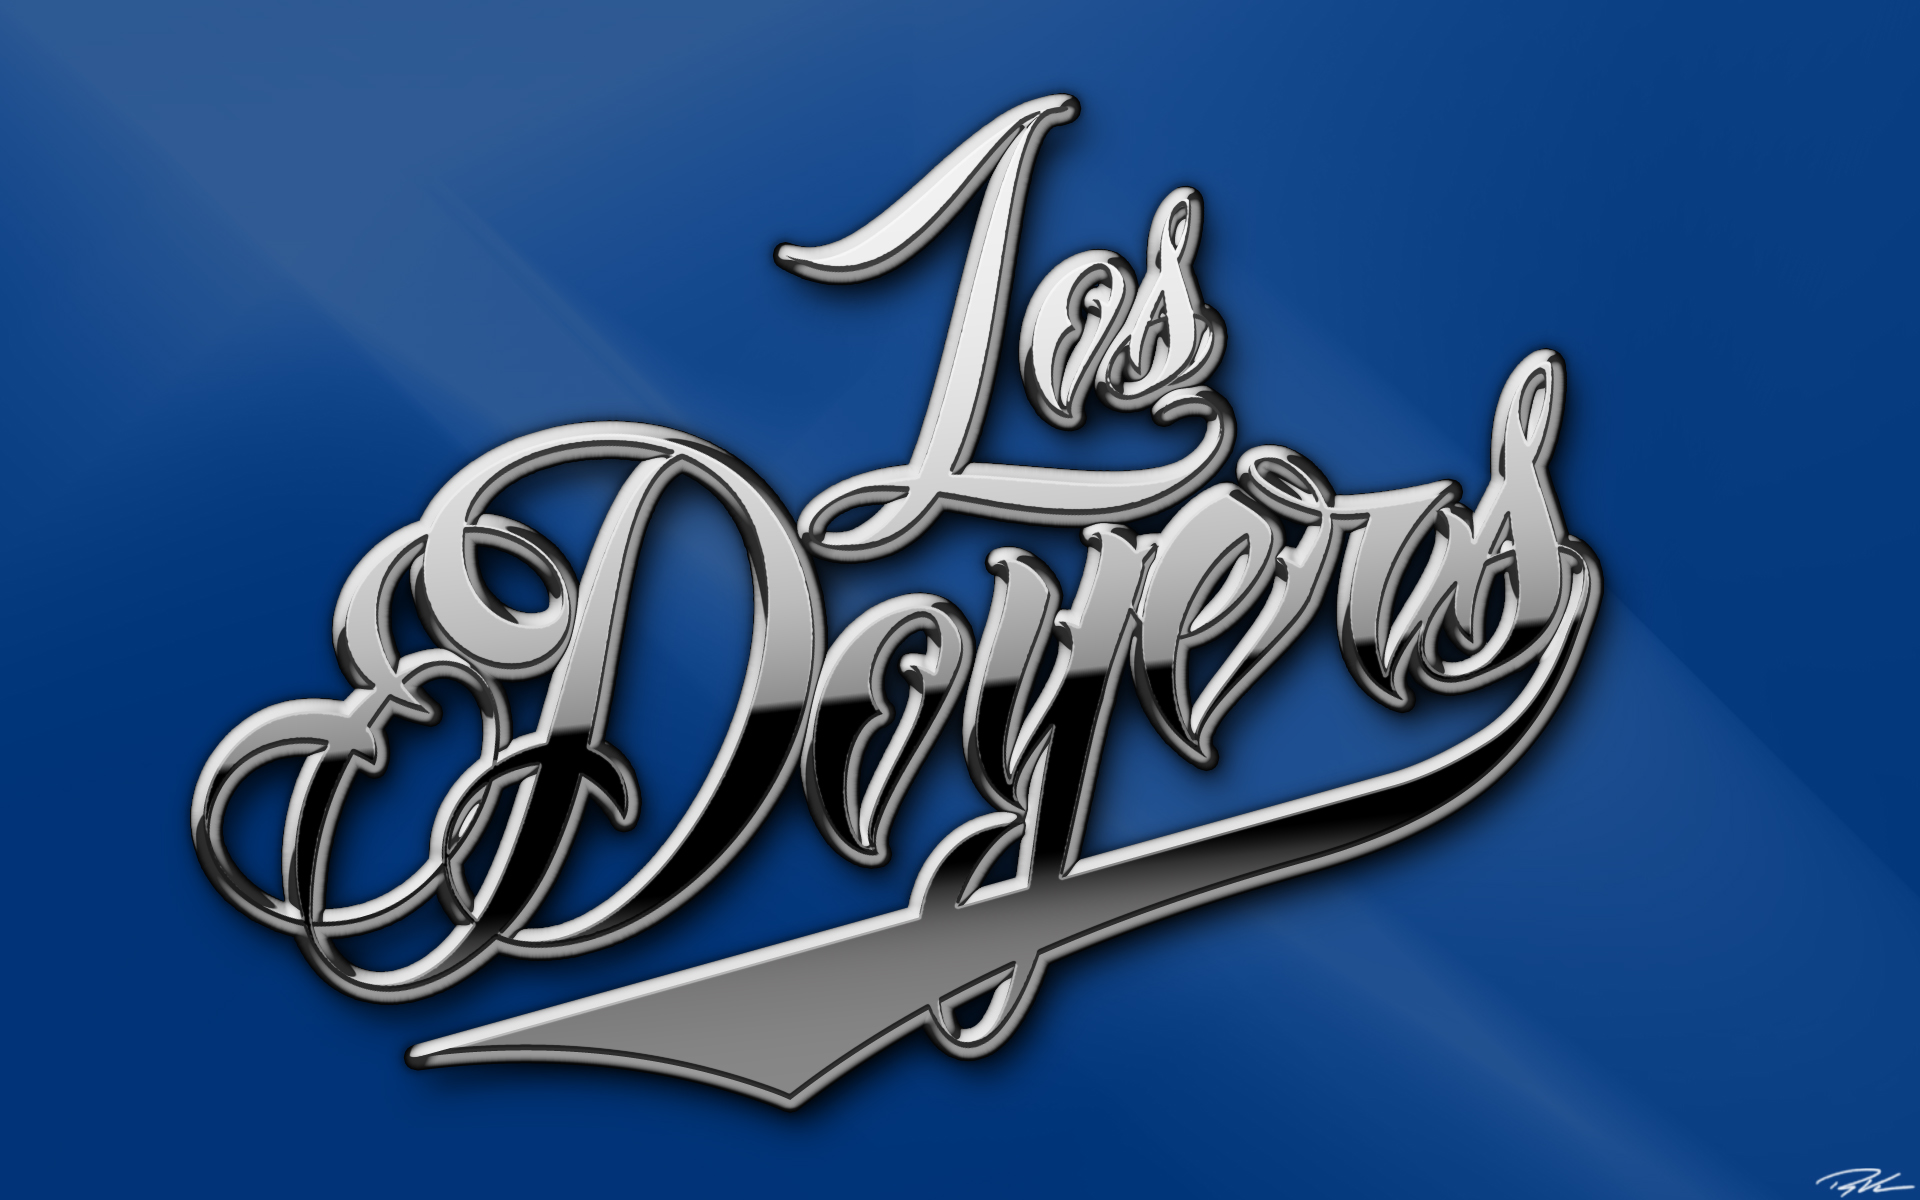 LA Dodgers Iphone Wallpaper and Lock Screen by GoDodgerz on DeviantArt